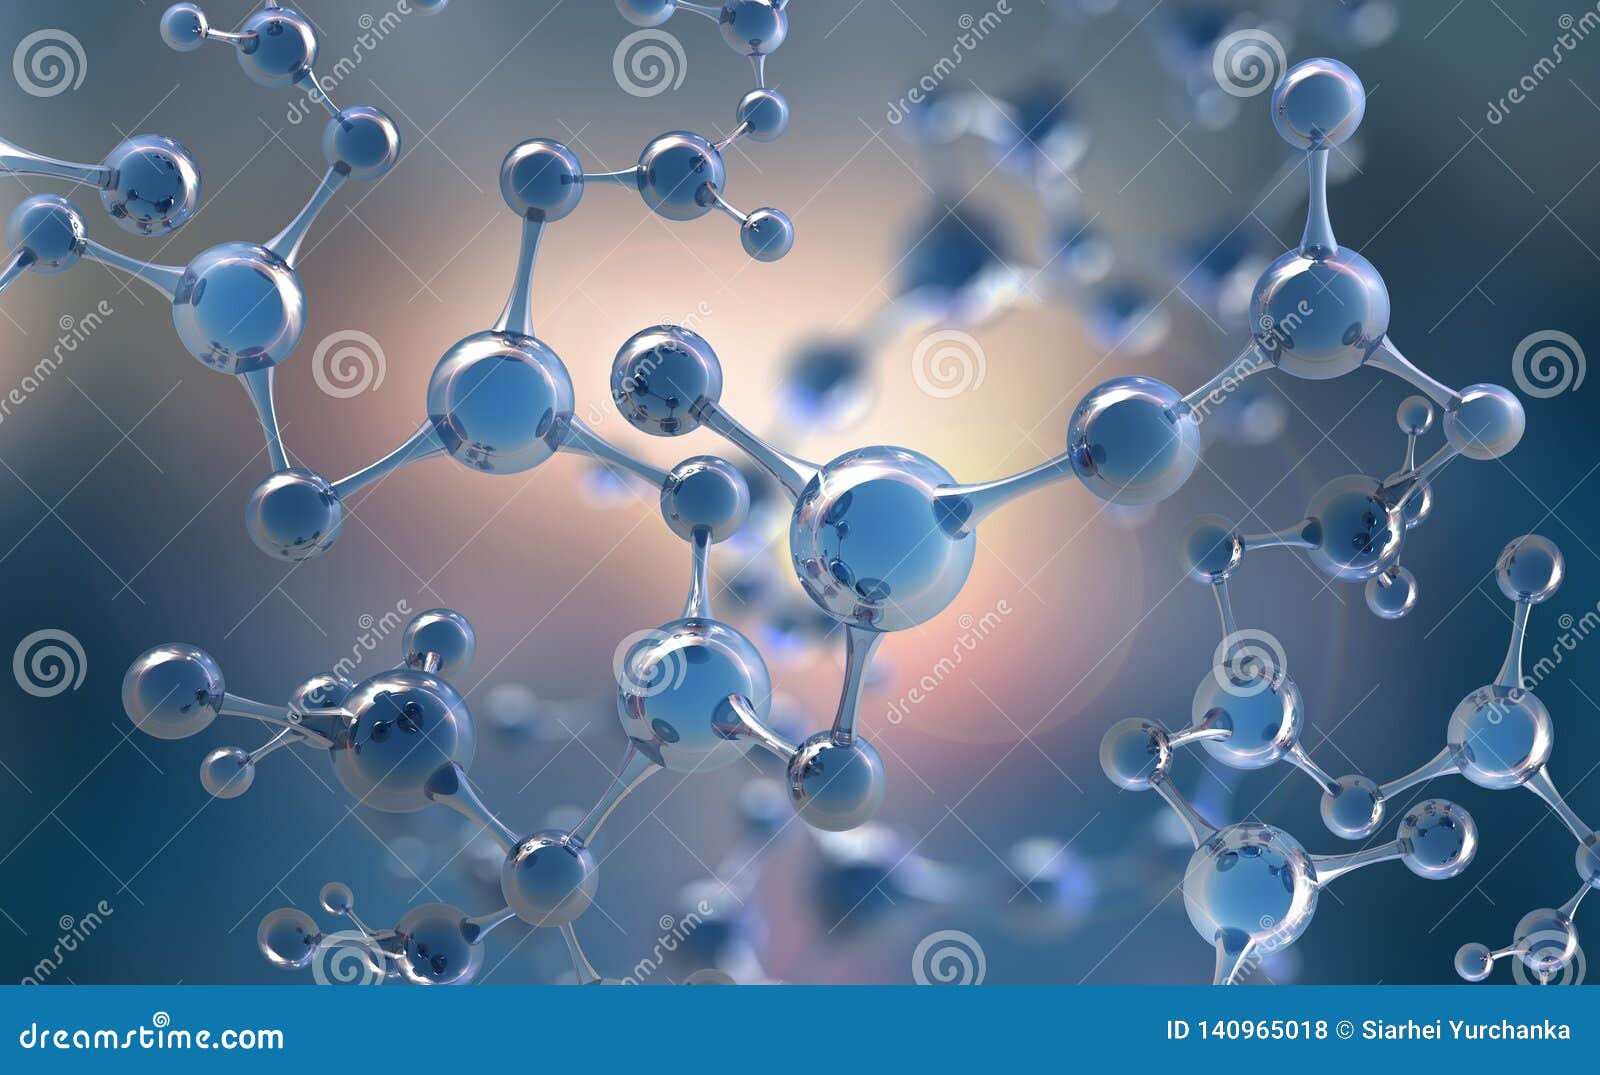 abstract molecule model. scientific research in molecular chemistry